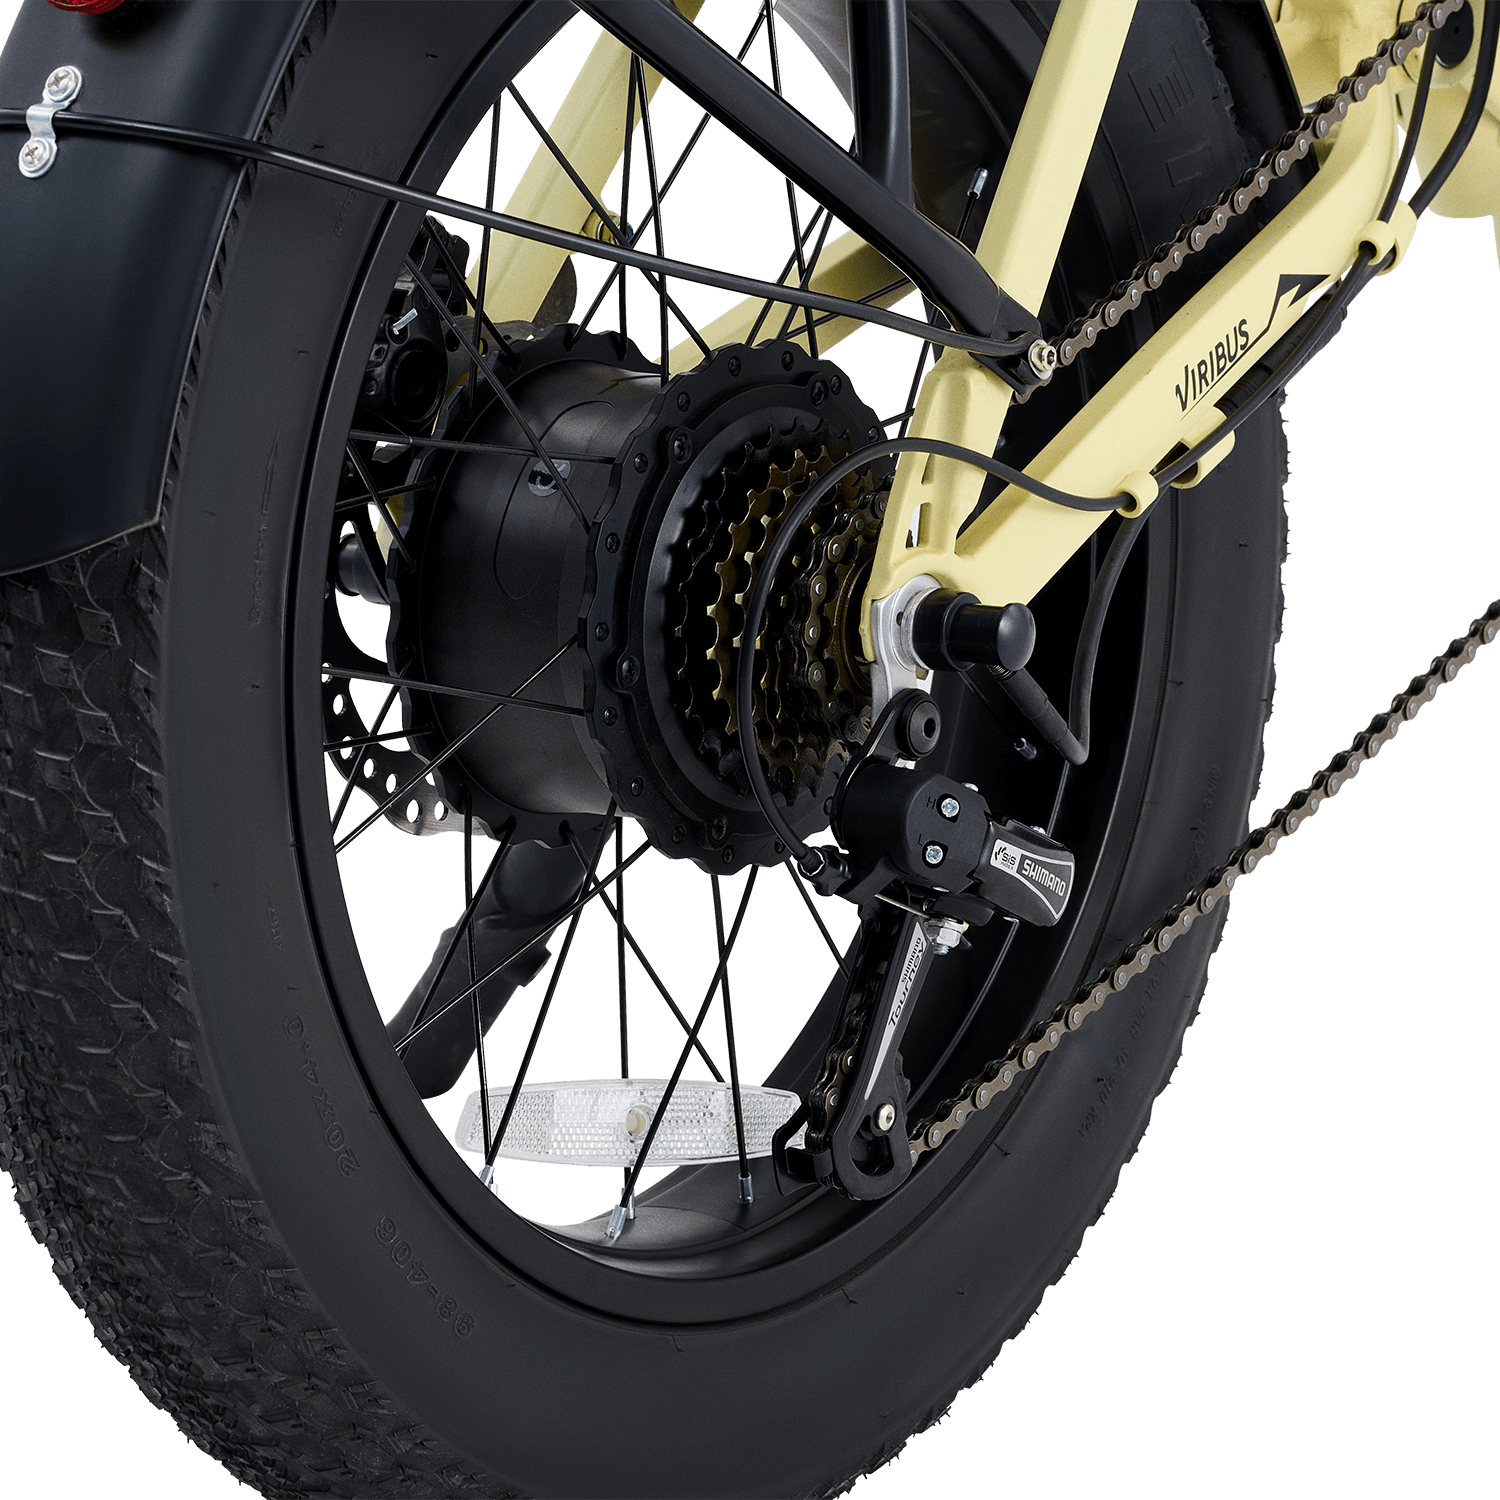 Viribus Getaway Plus Full Suspension Fat Tire Electric Folding Bike